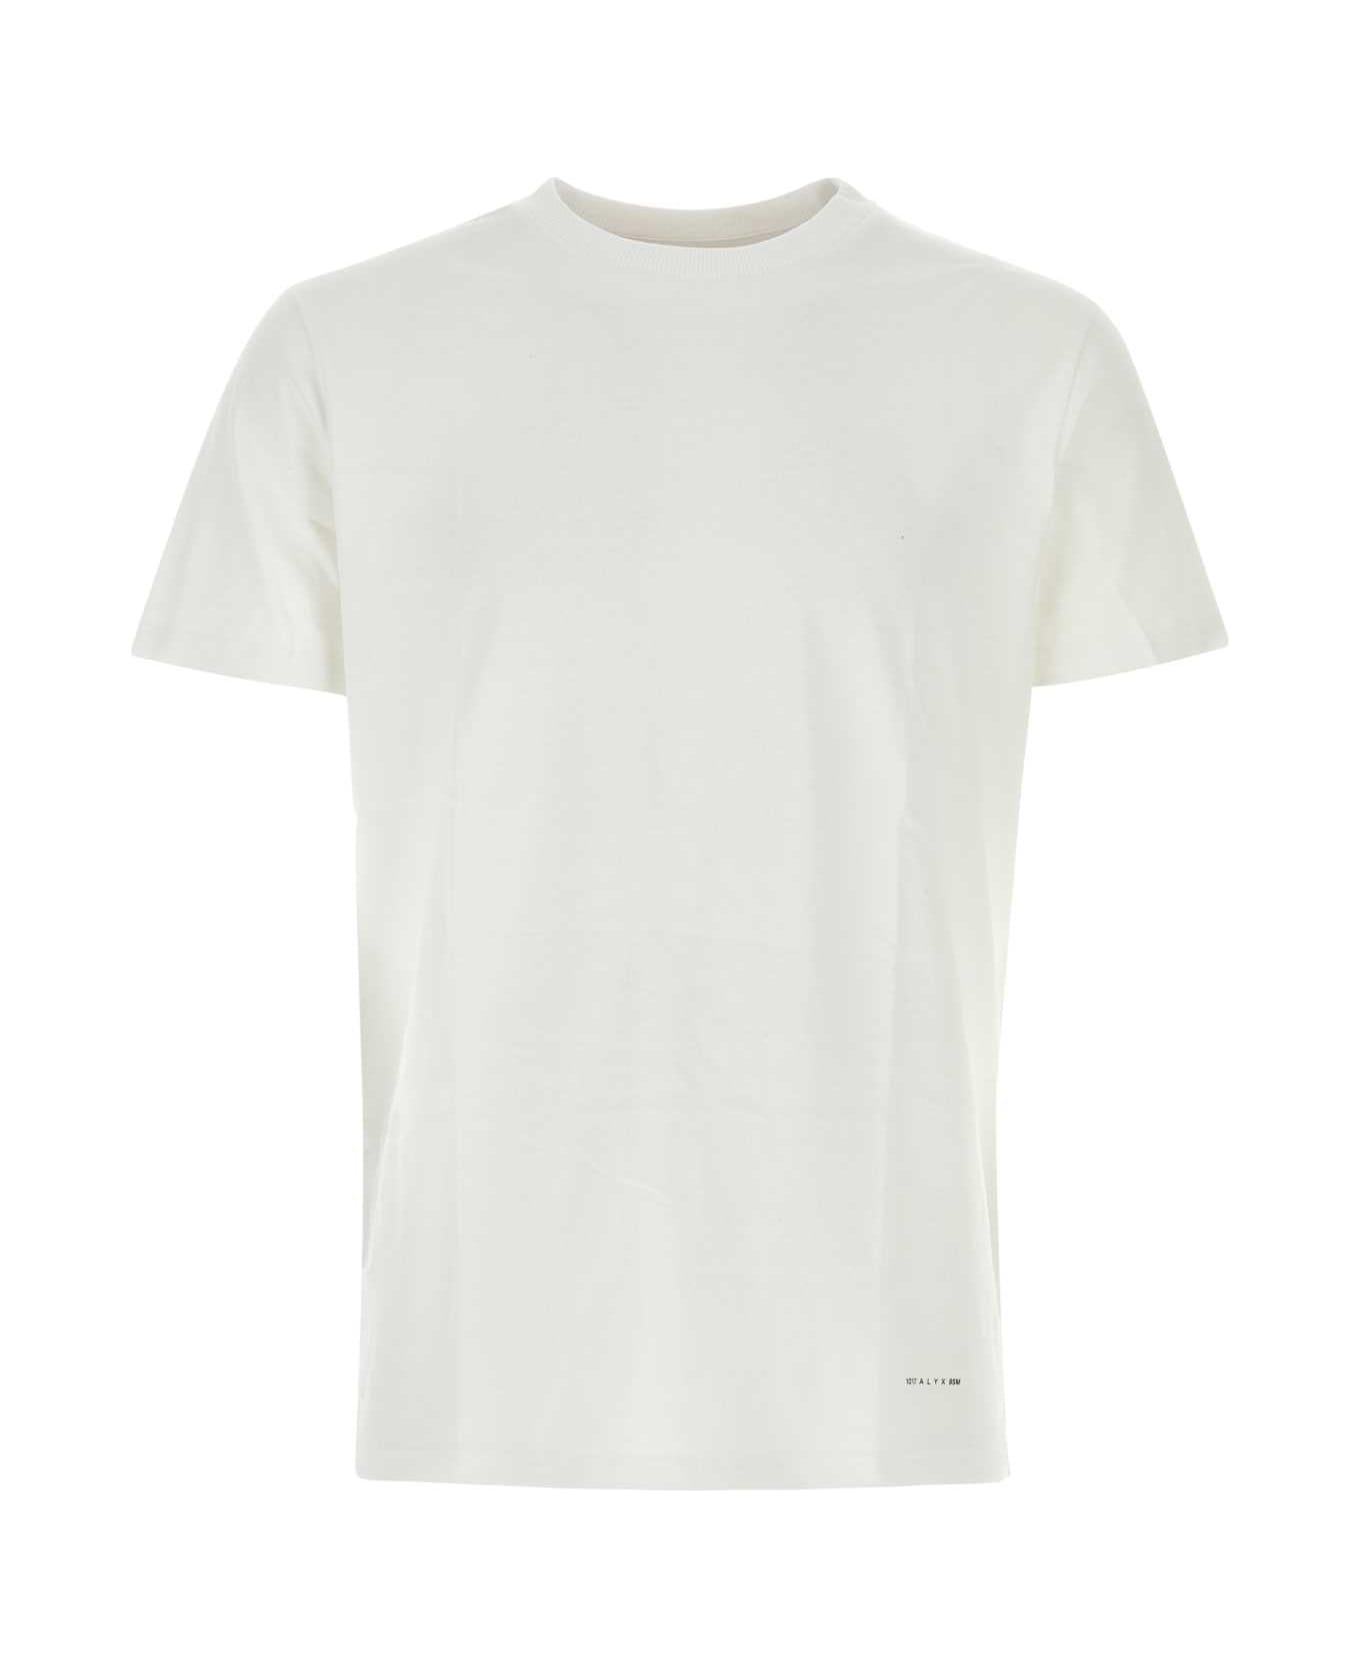 1017 ALYX 9SM White Cotton T-shirt Set - WTH0001